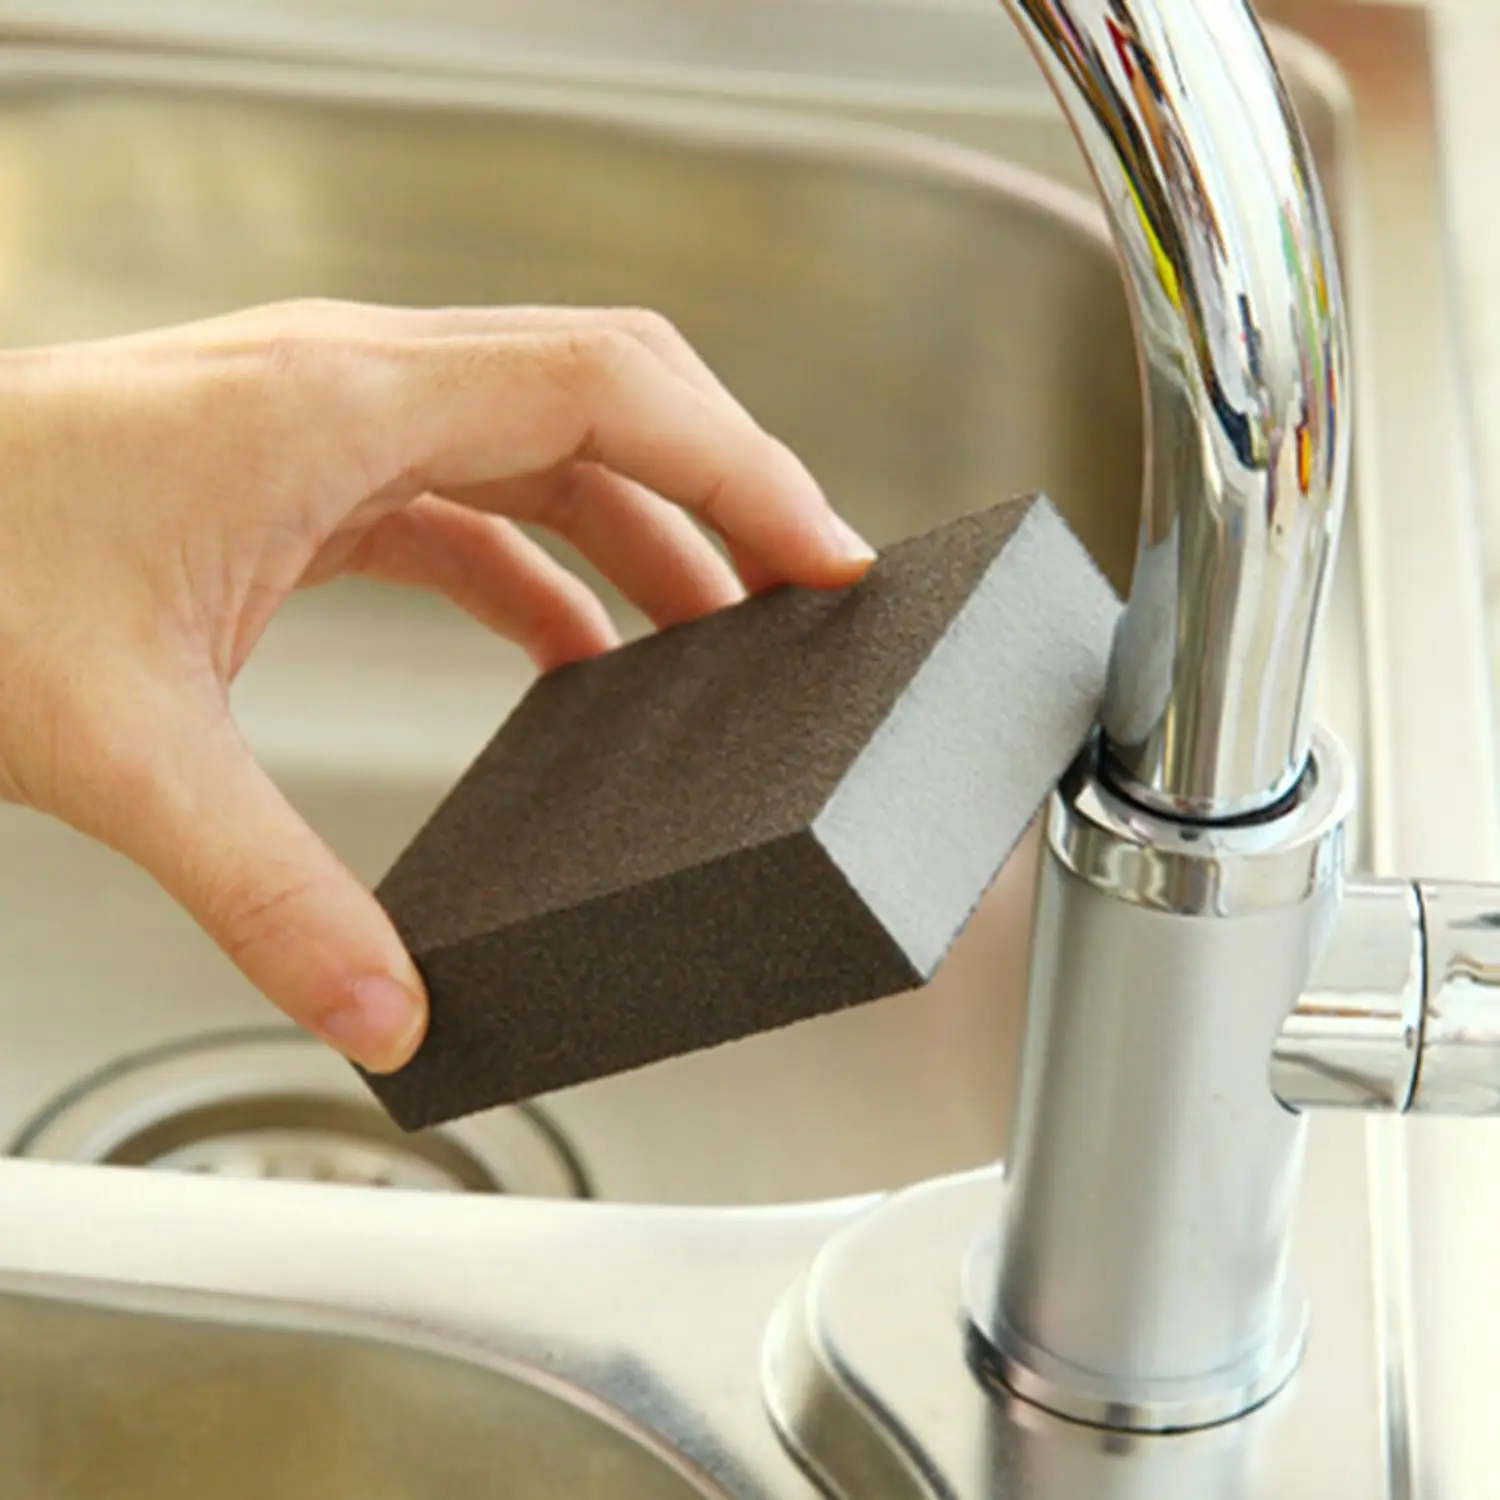 

Clean Square Large Flexible Hotel Black Area Cleaning Toilet Magic Kitchen Carborundum Descaling Sponge Fine Brush